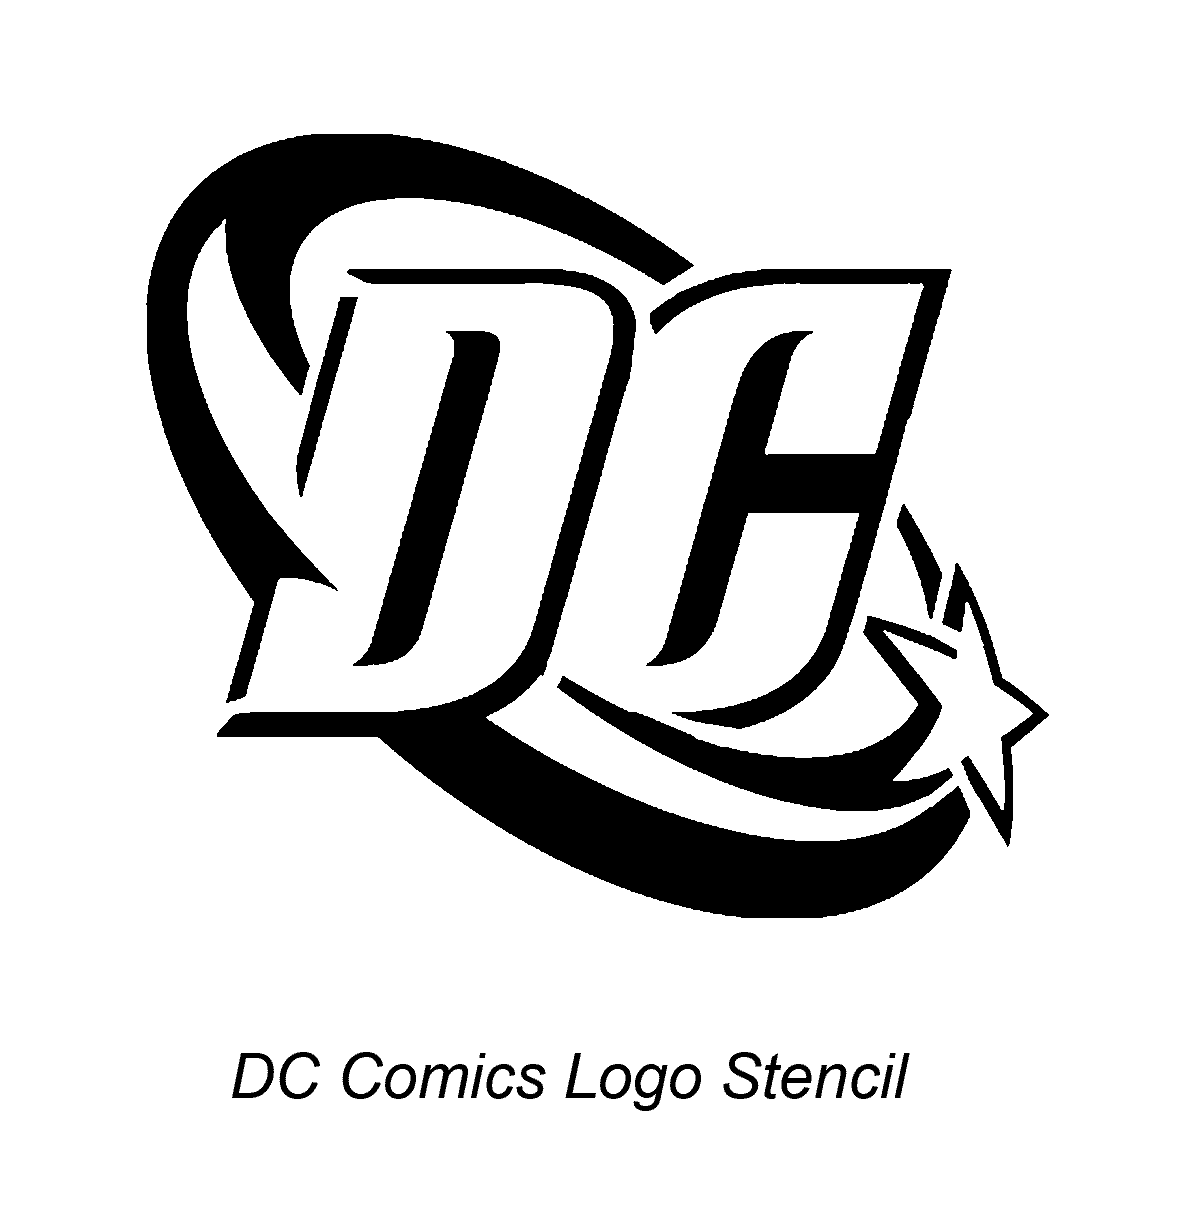 dc comics logo image gif 1 200 1 226 pixels design pinterest logos medium